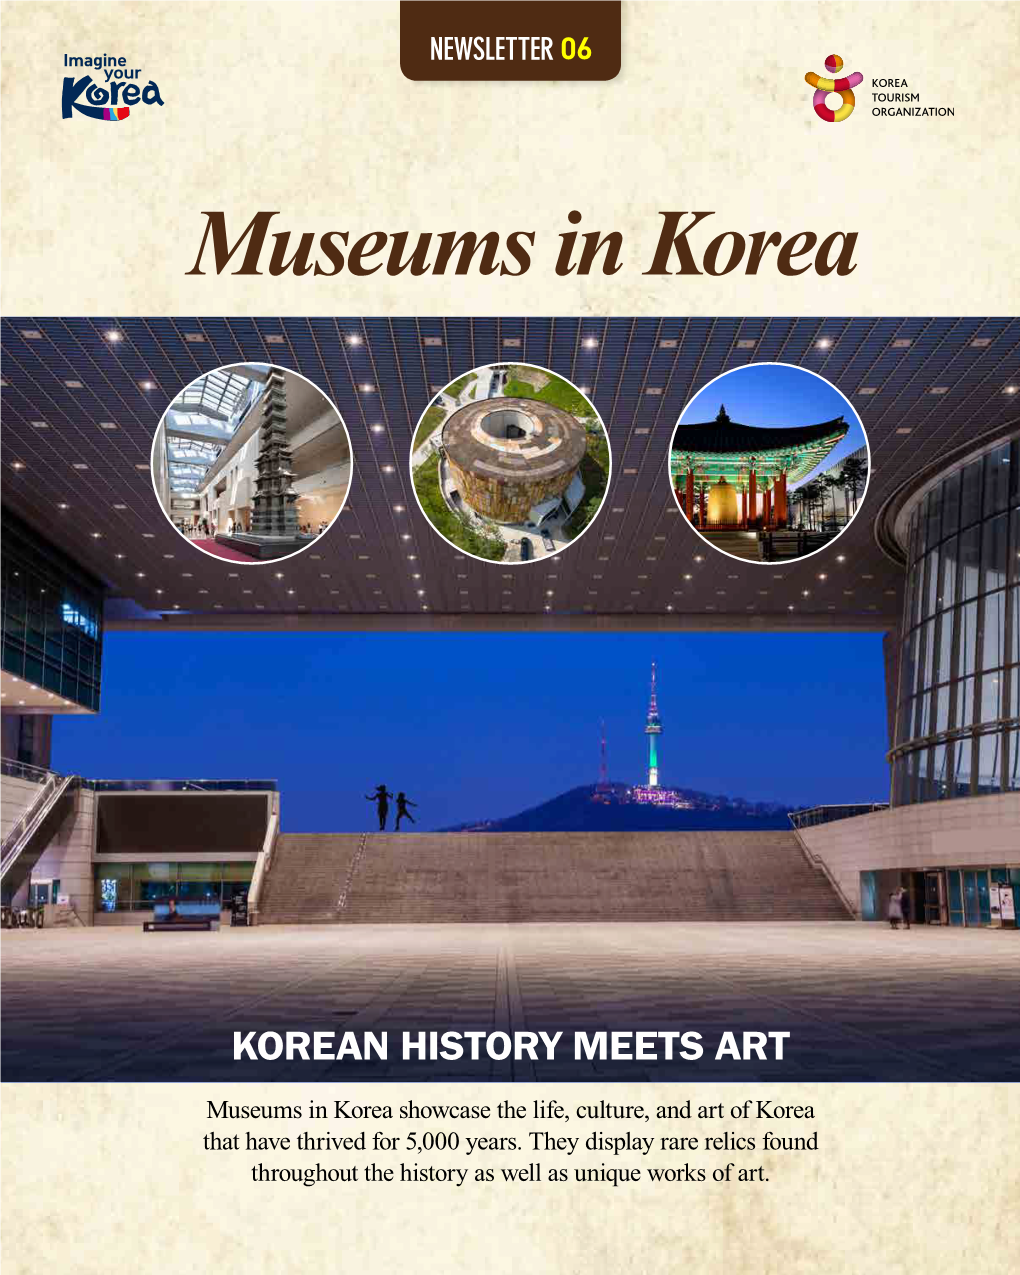 Korean History Meets Art